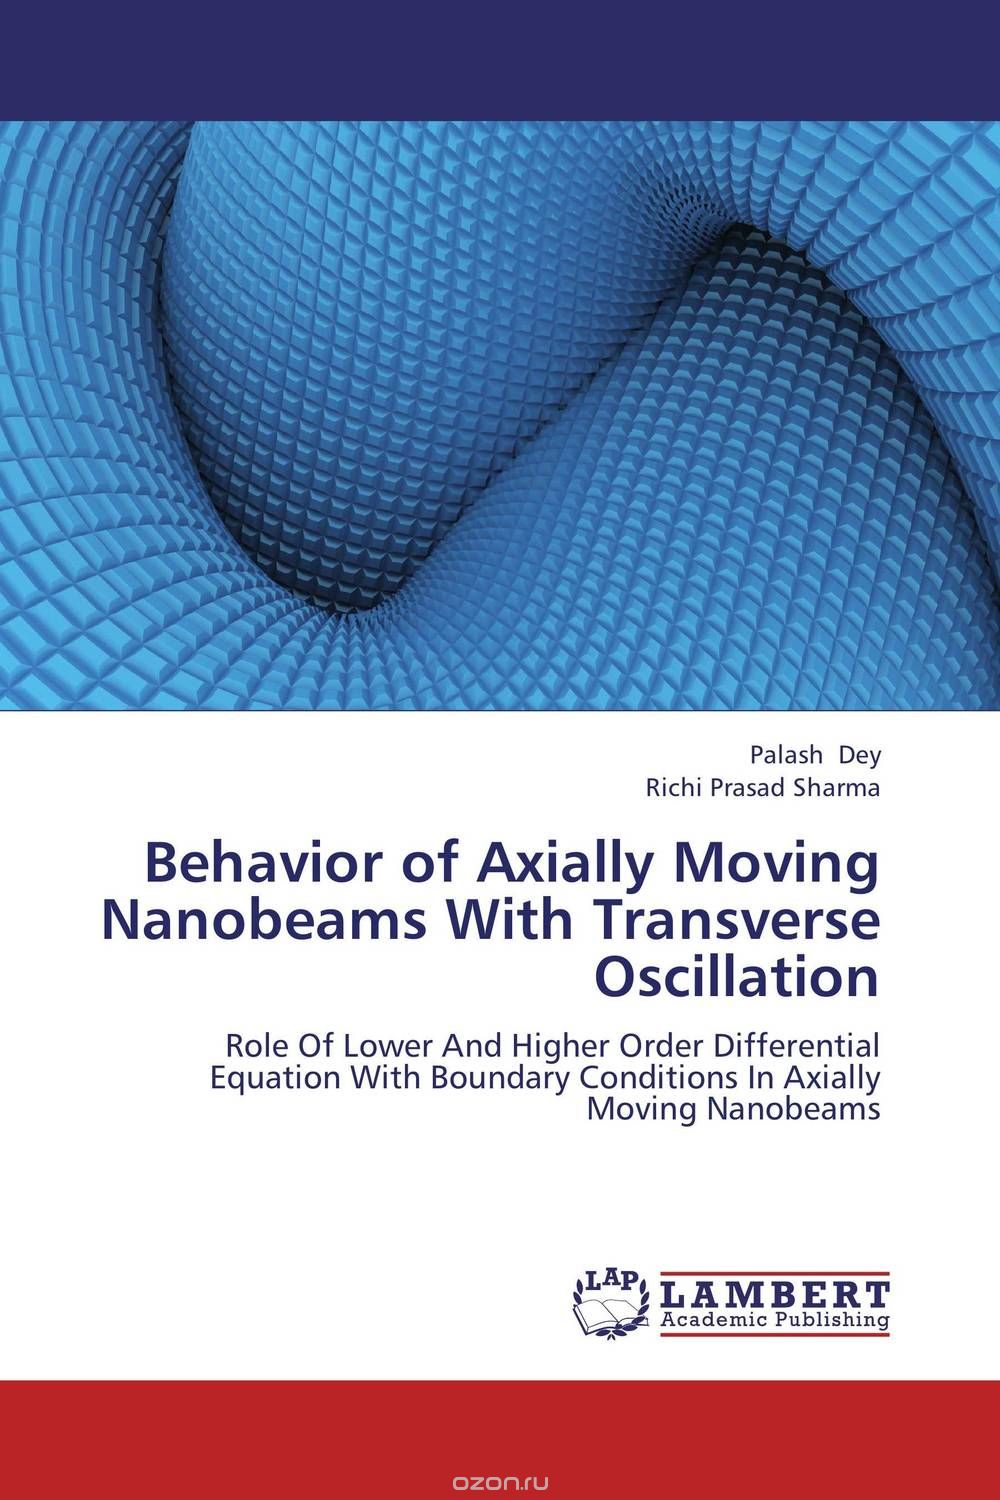 Behavior of Axially Moving Nanobeams With Transverse Oscillation